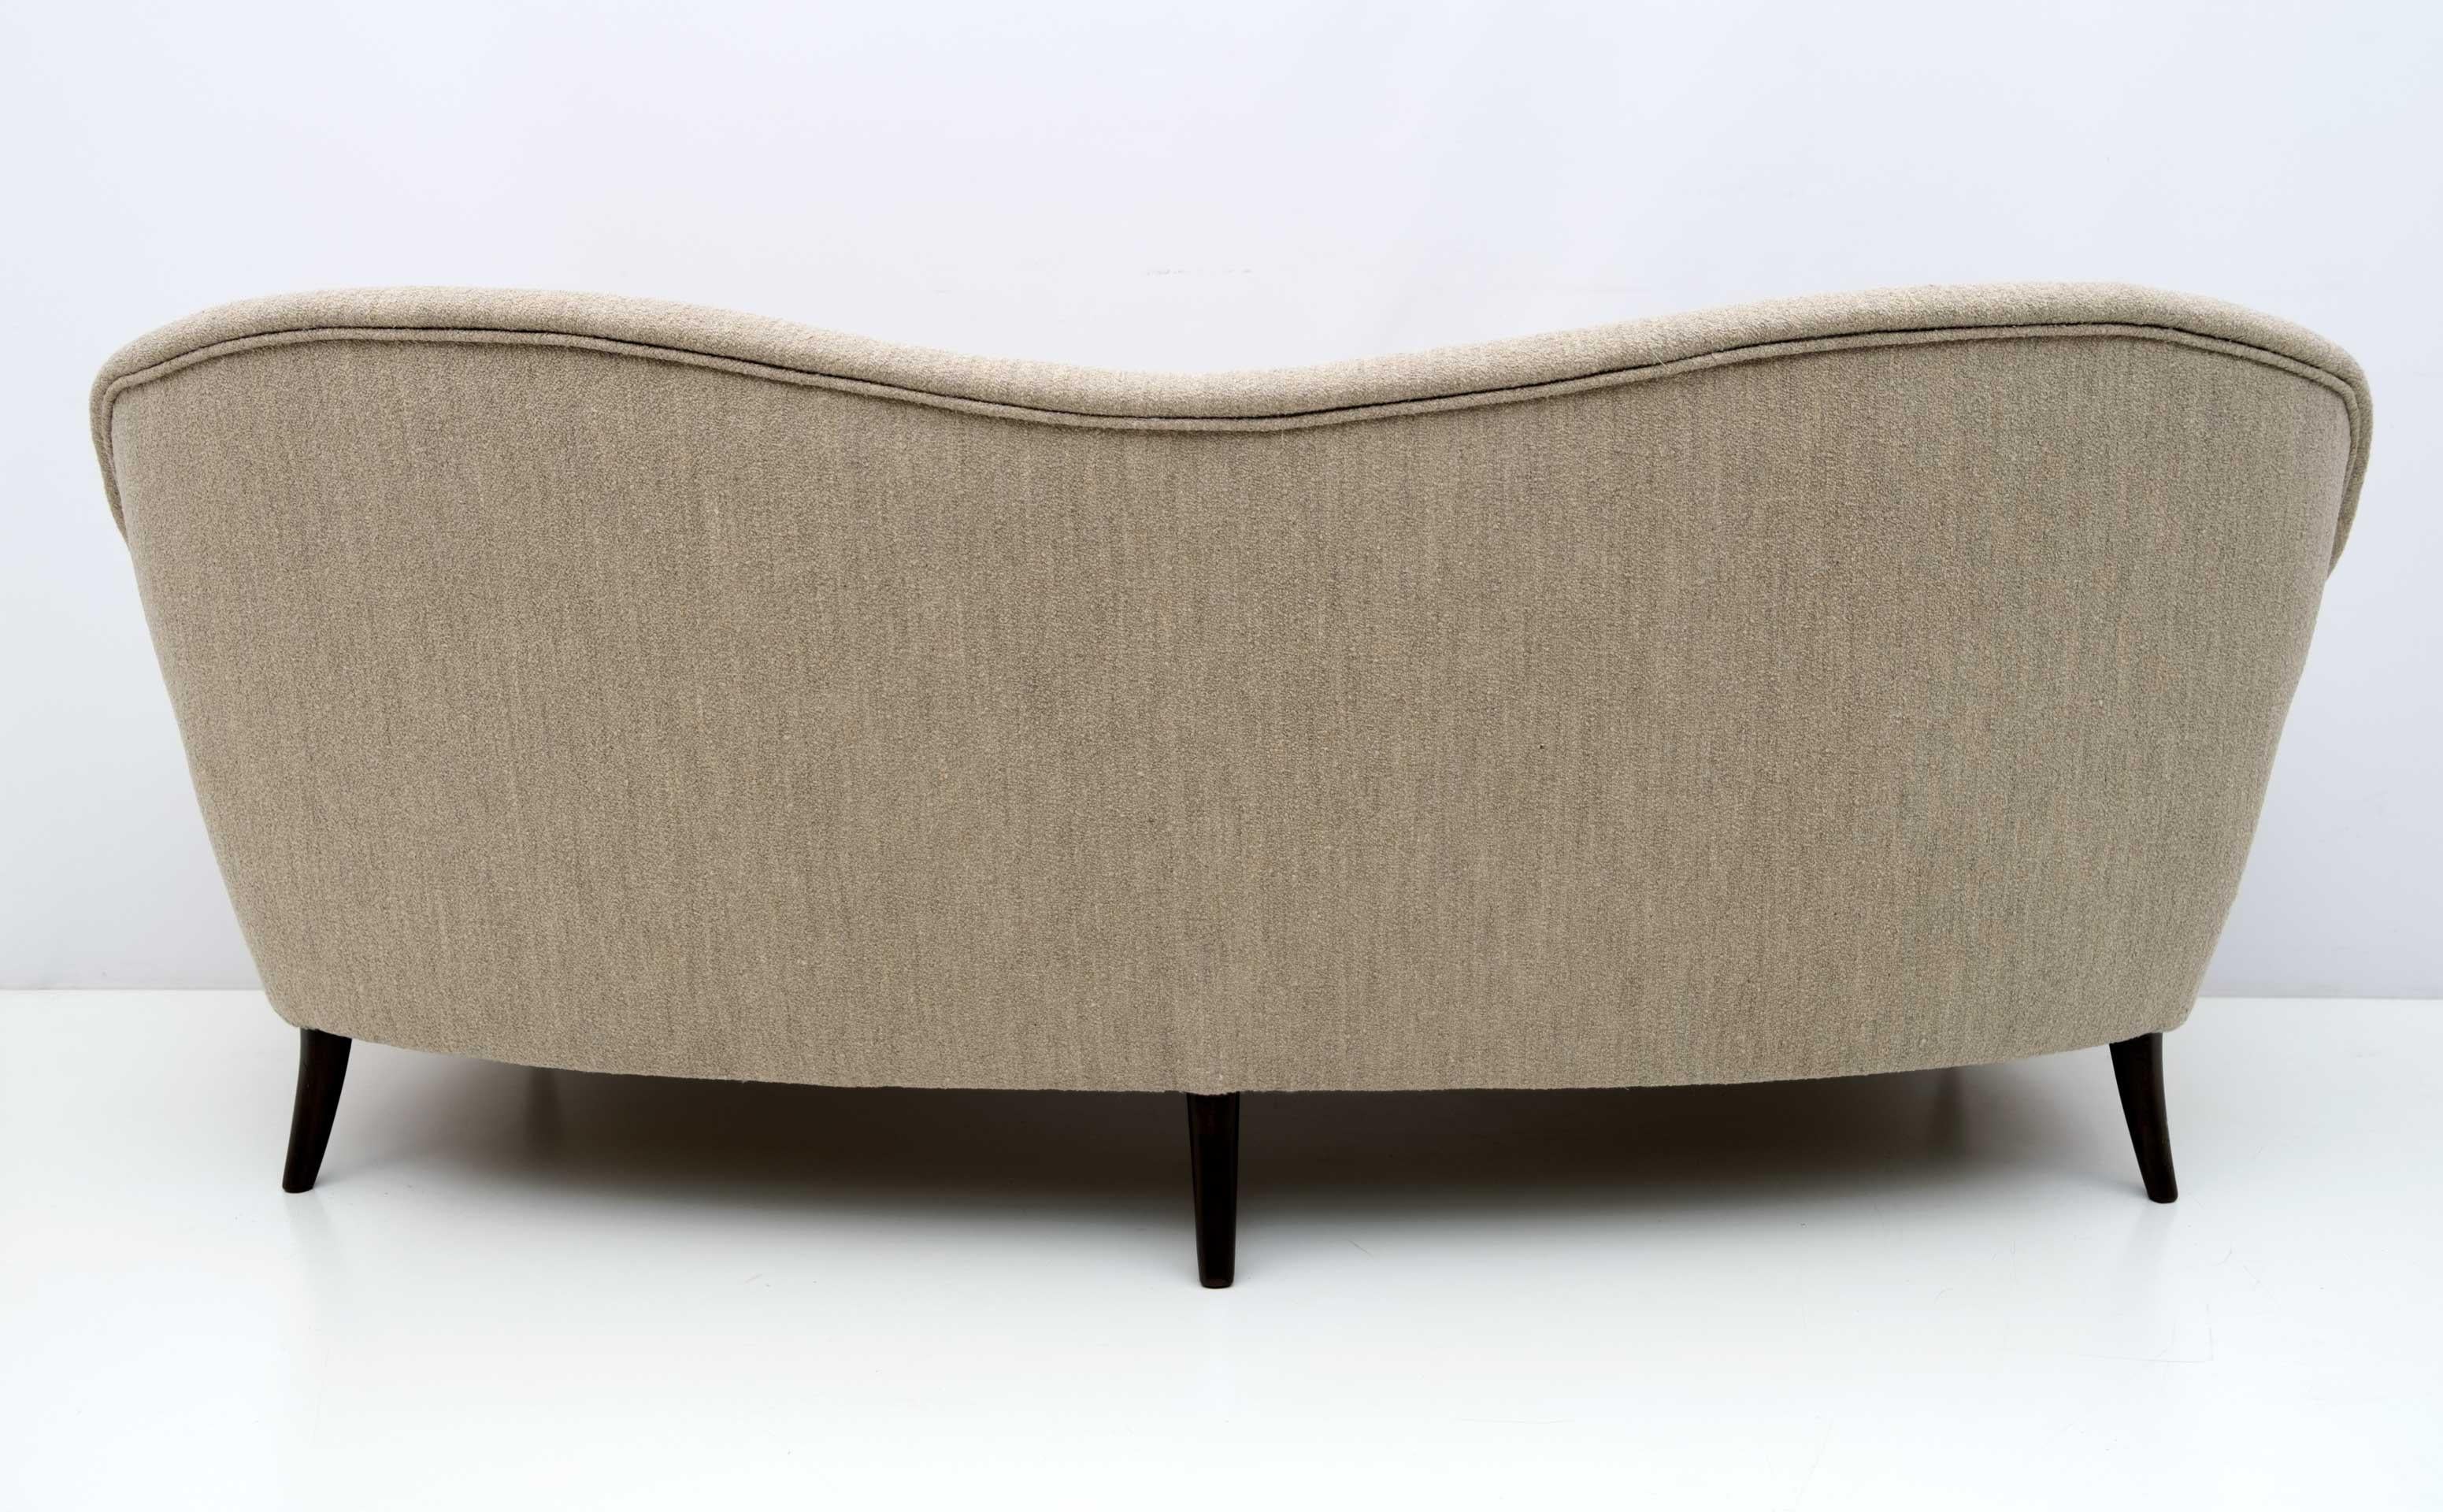 Gio Ponti Style Mid-Century Modern Italian Sofa for Isa Bergamo, 50s For Sale 3